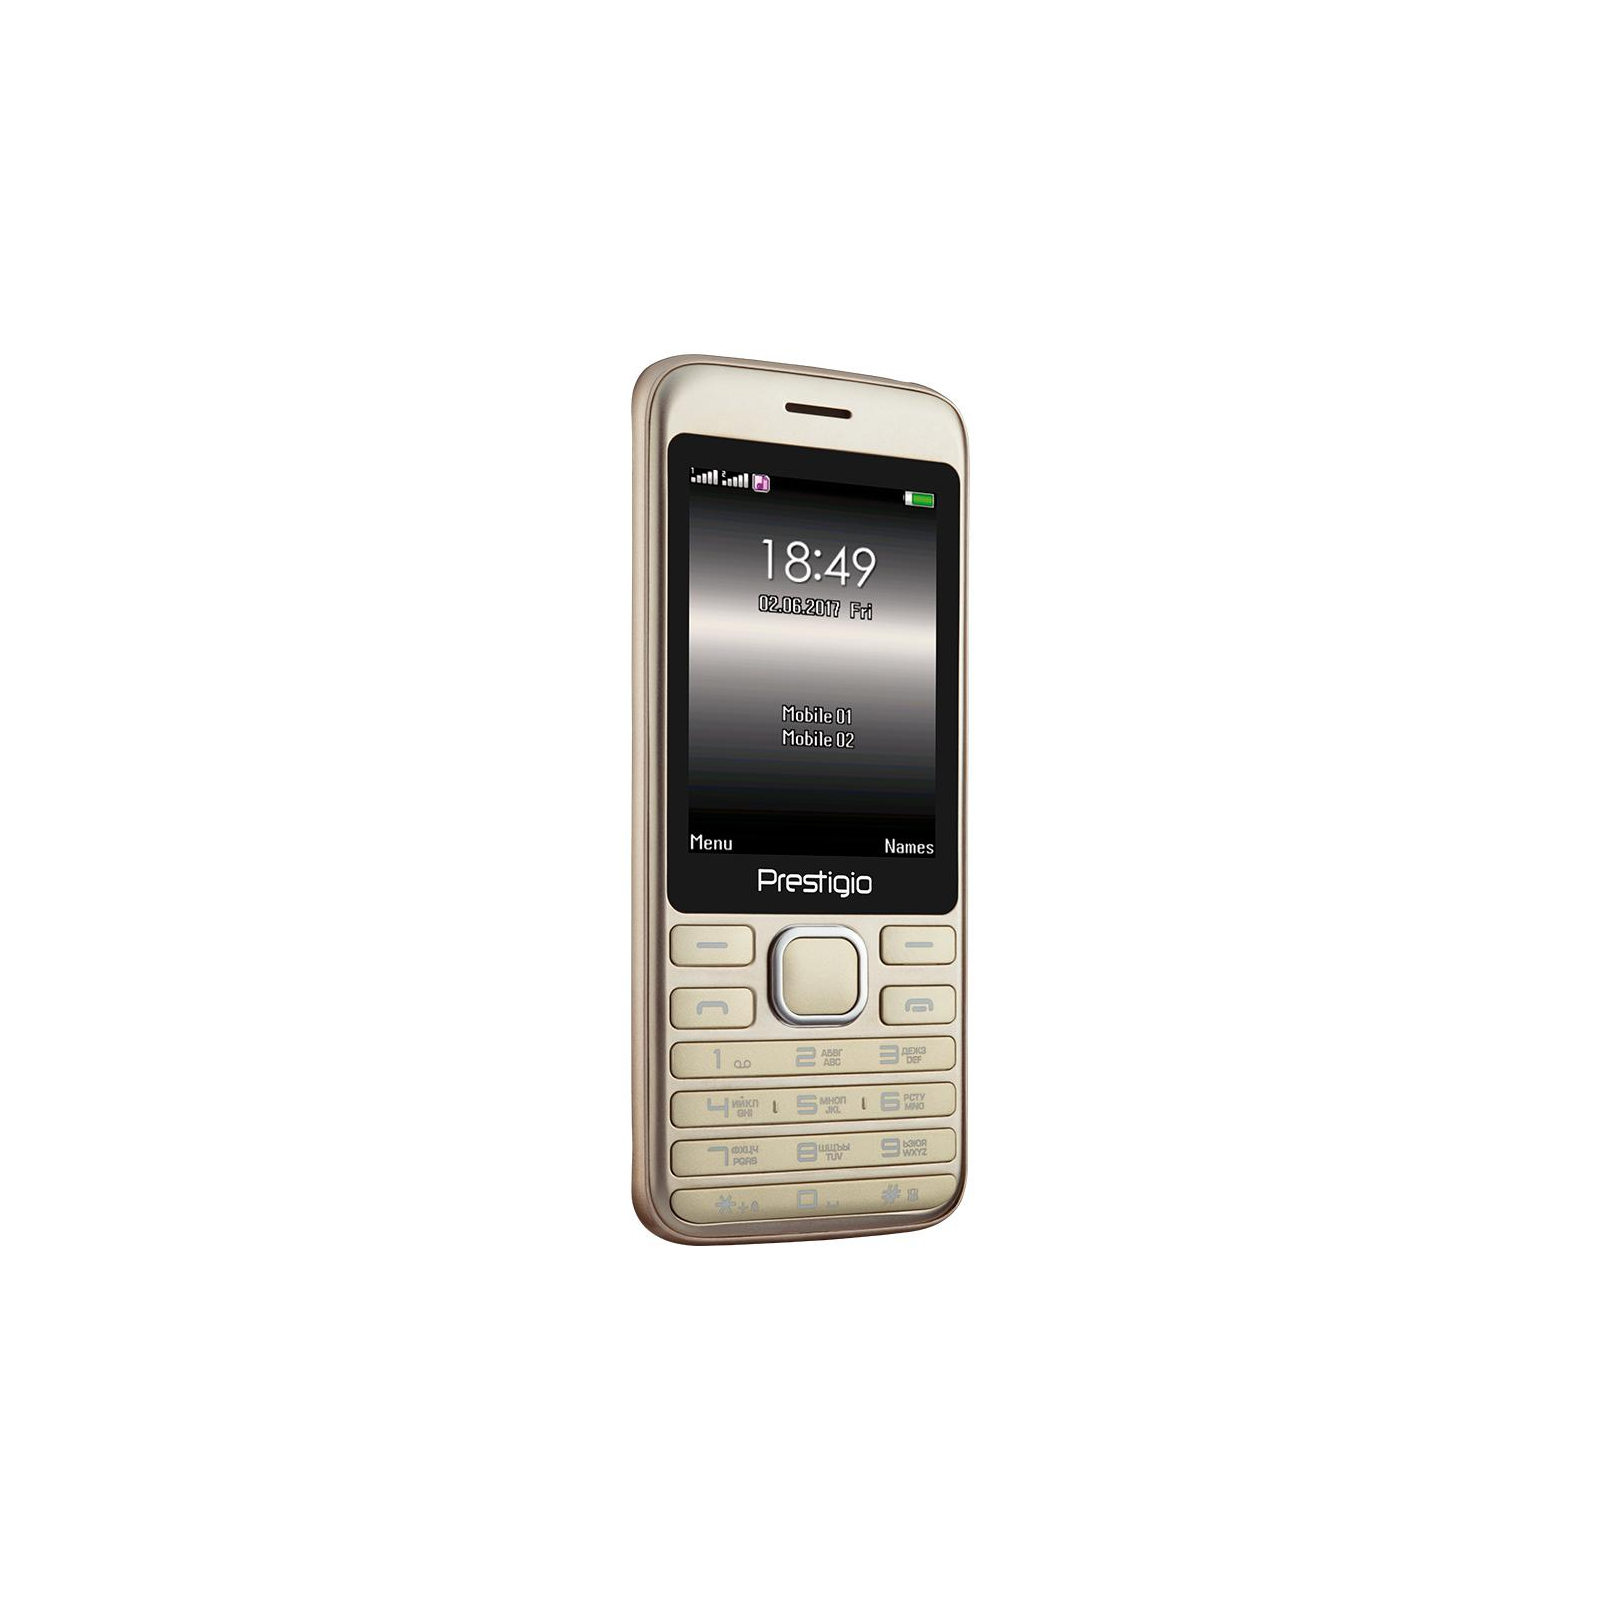 Мобильный телефон Prestigio 1281 Duo Red (PFP1281DUORED) изображение 3